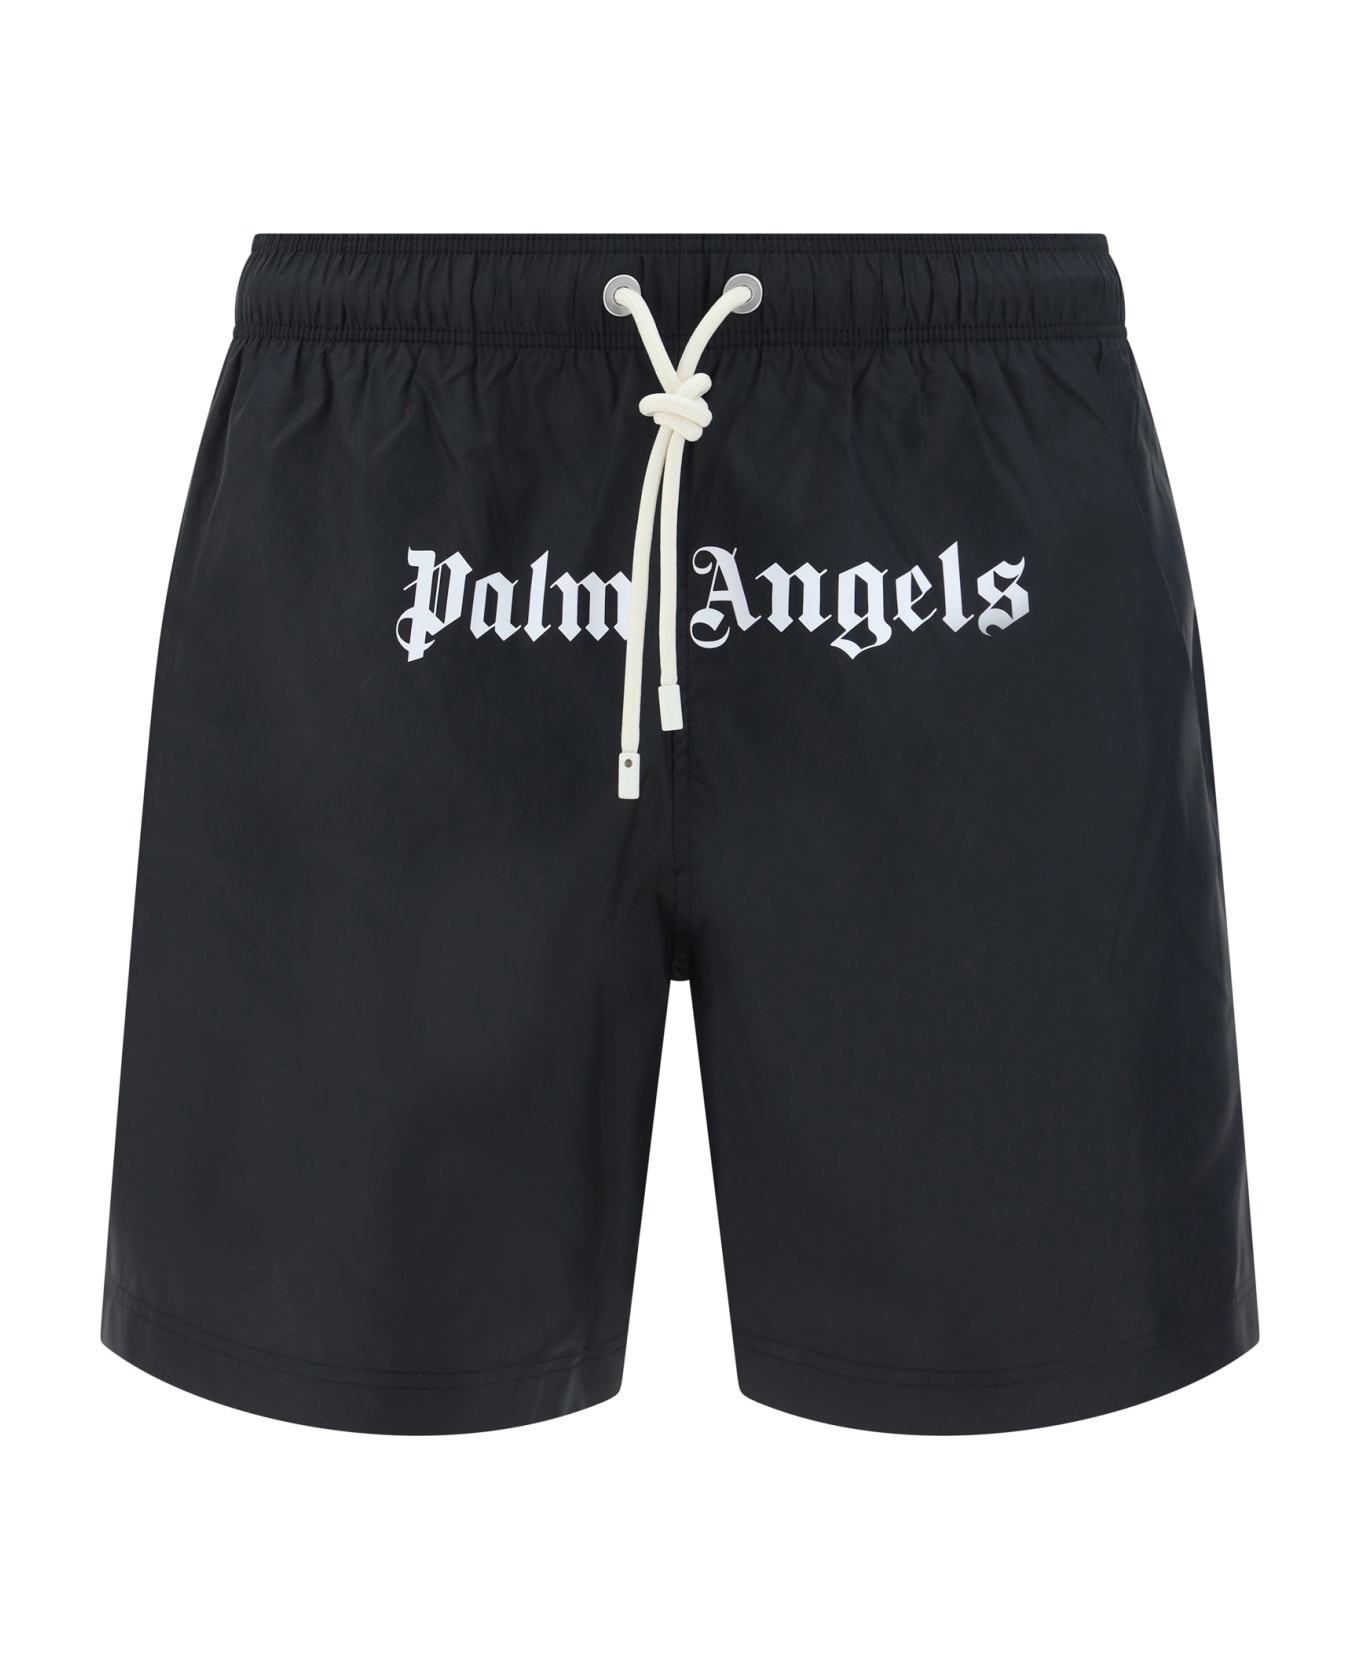 Palm Angels Swimshorts - Nero